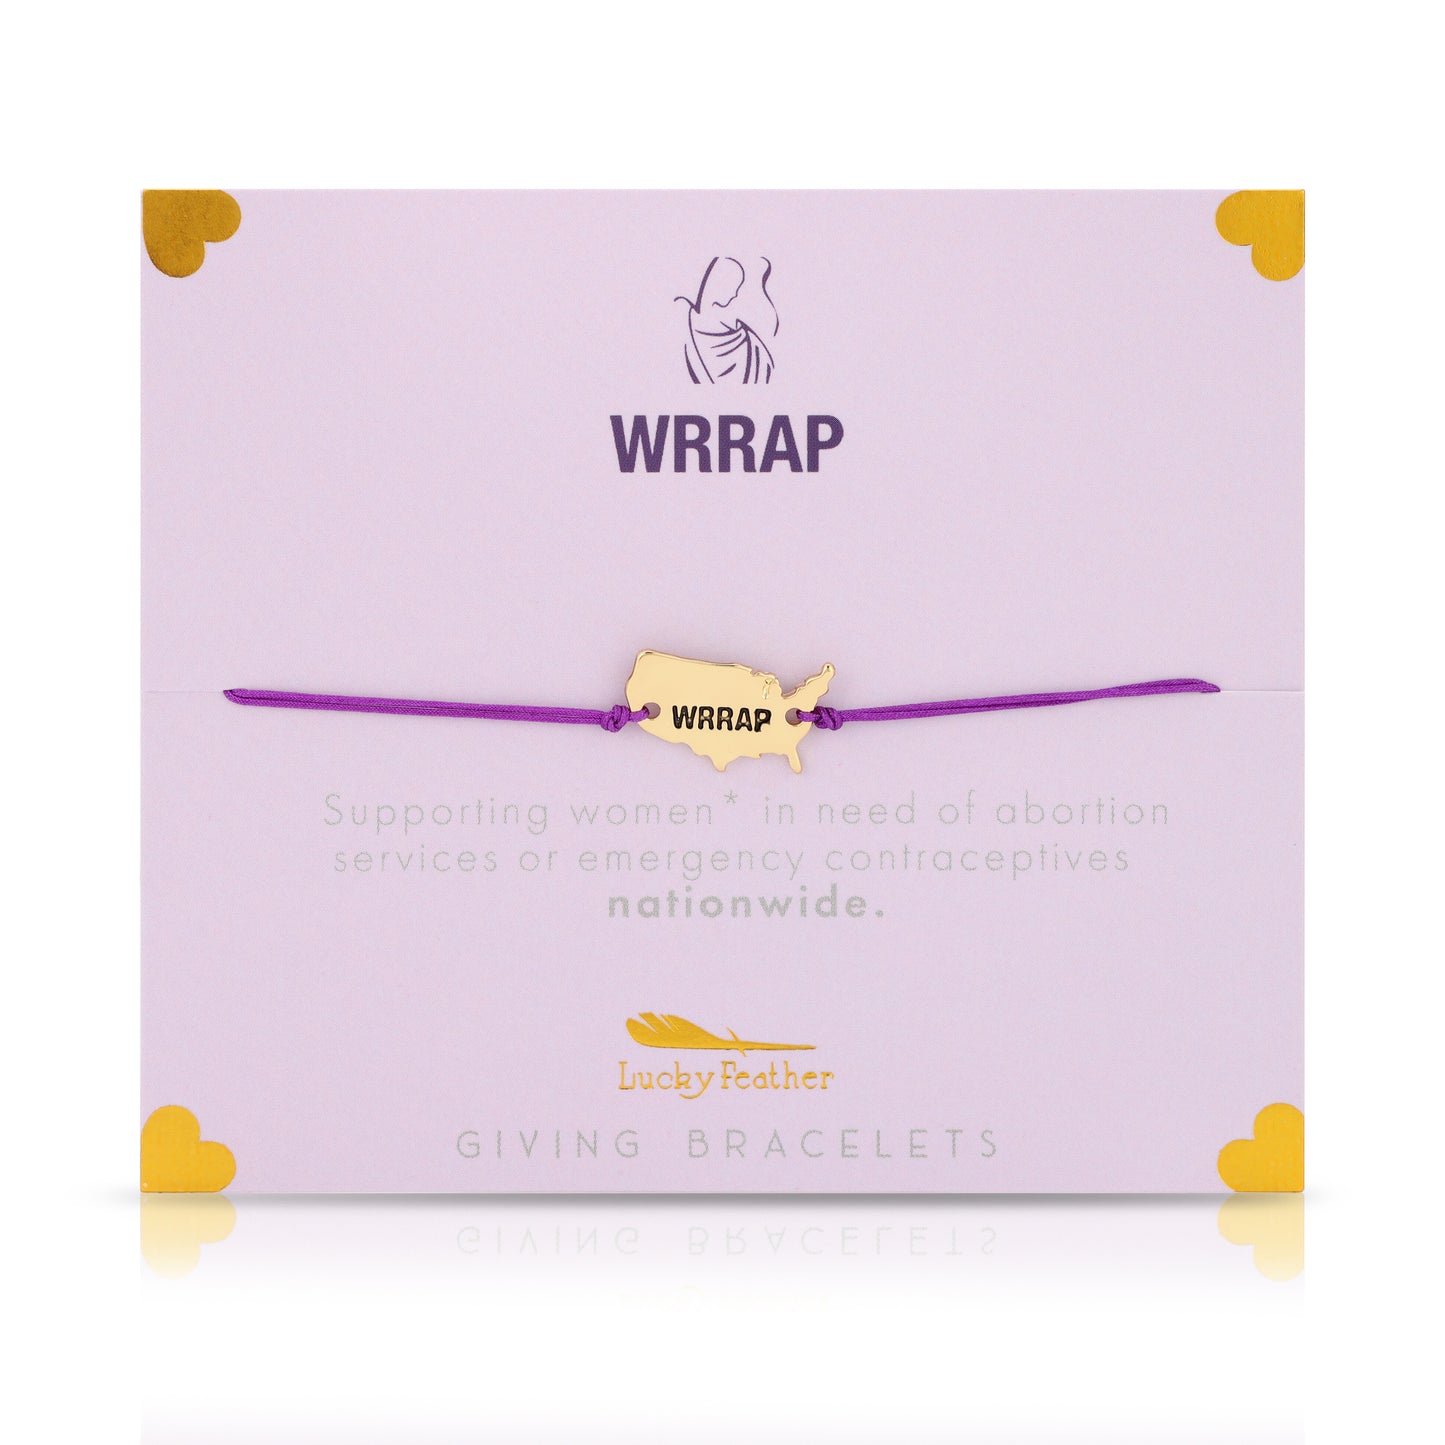 WRRAP Bracelet